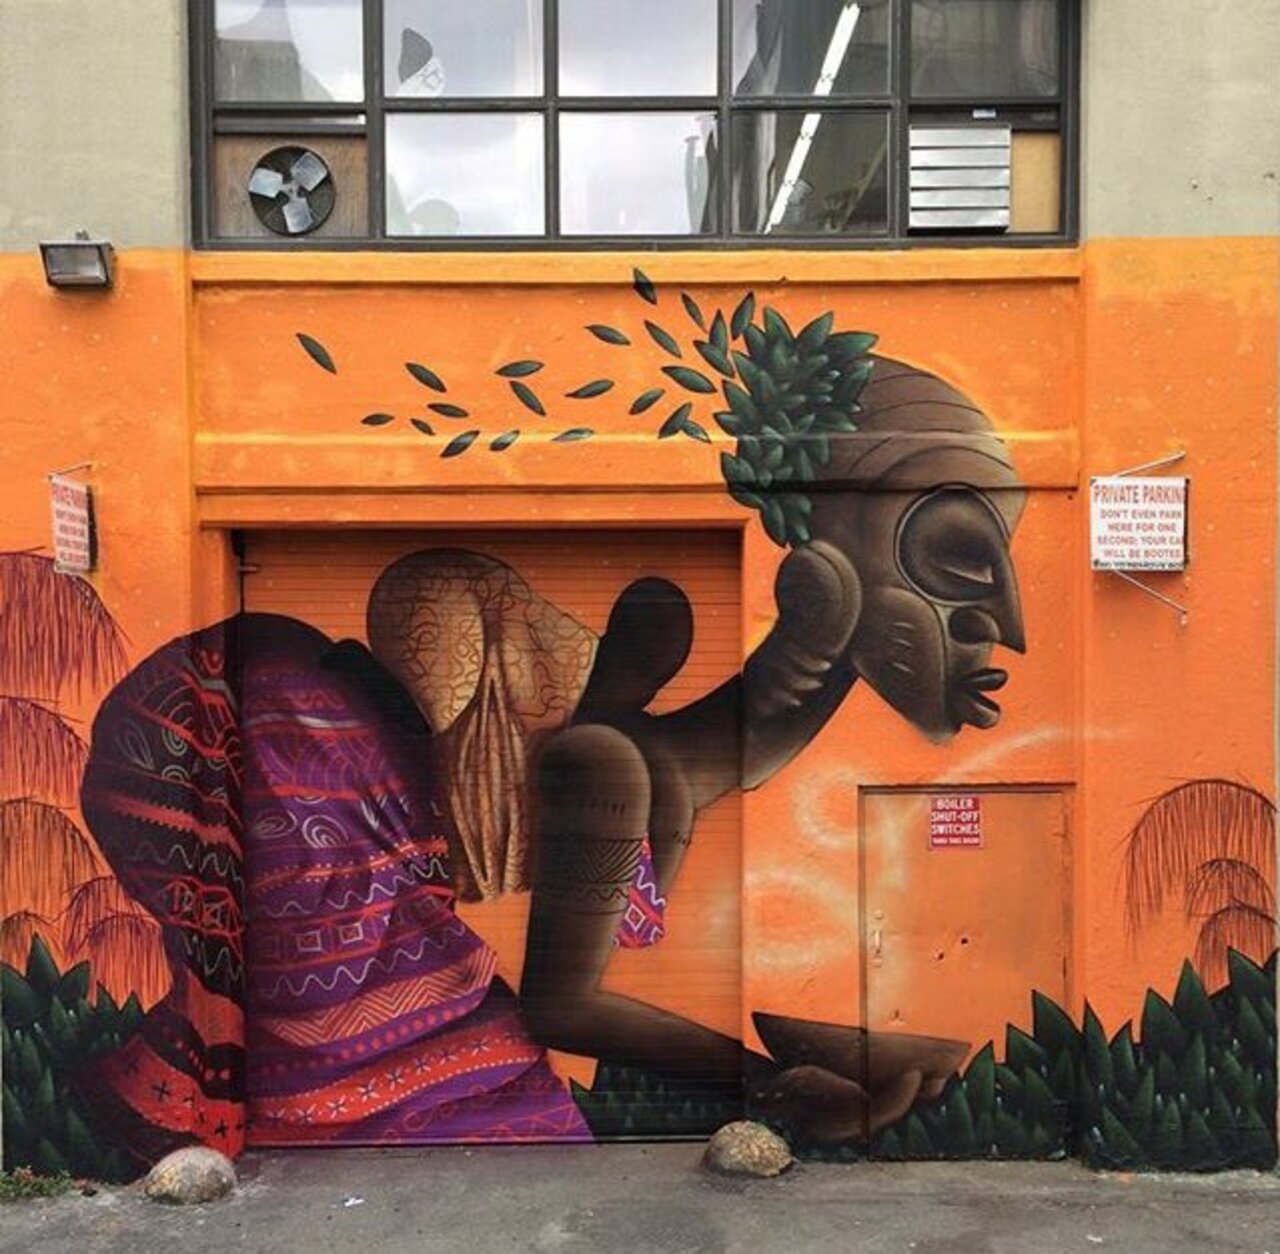 New Street Art by Alexandre Keto in NYC 

#art #graffiti #mural #streetart https://t.co/uYGaR9dU83